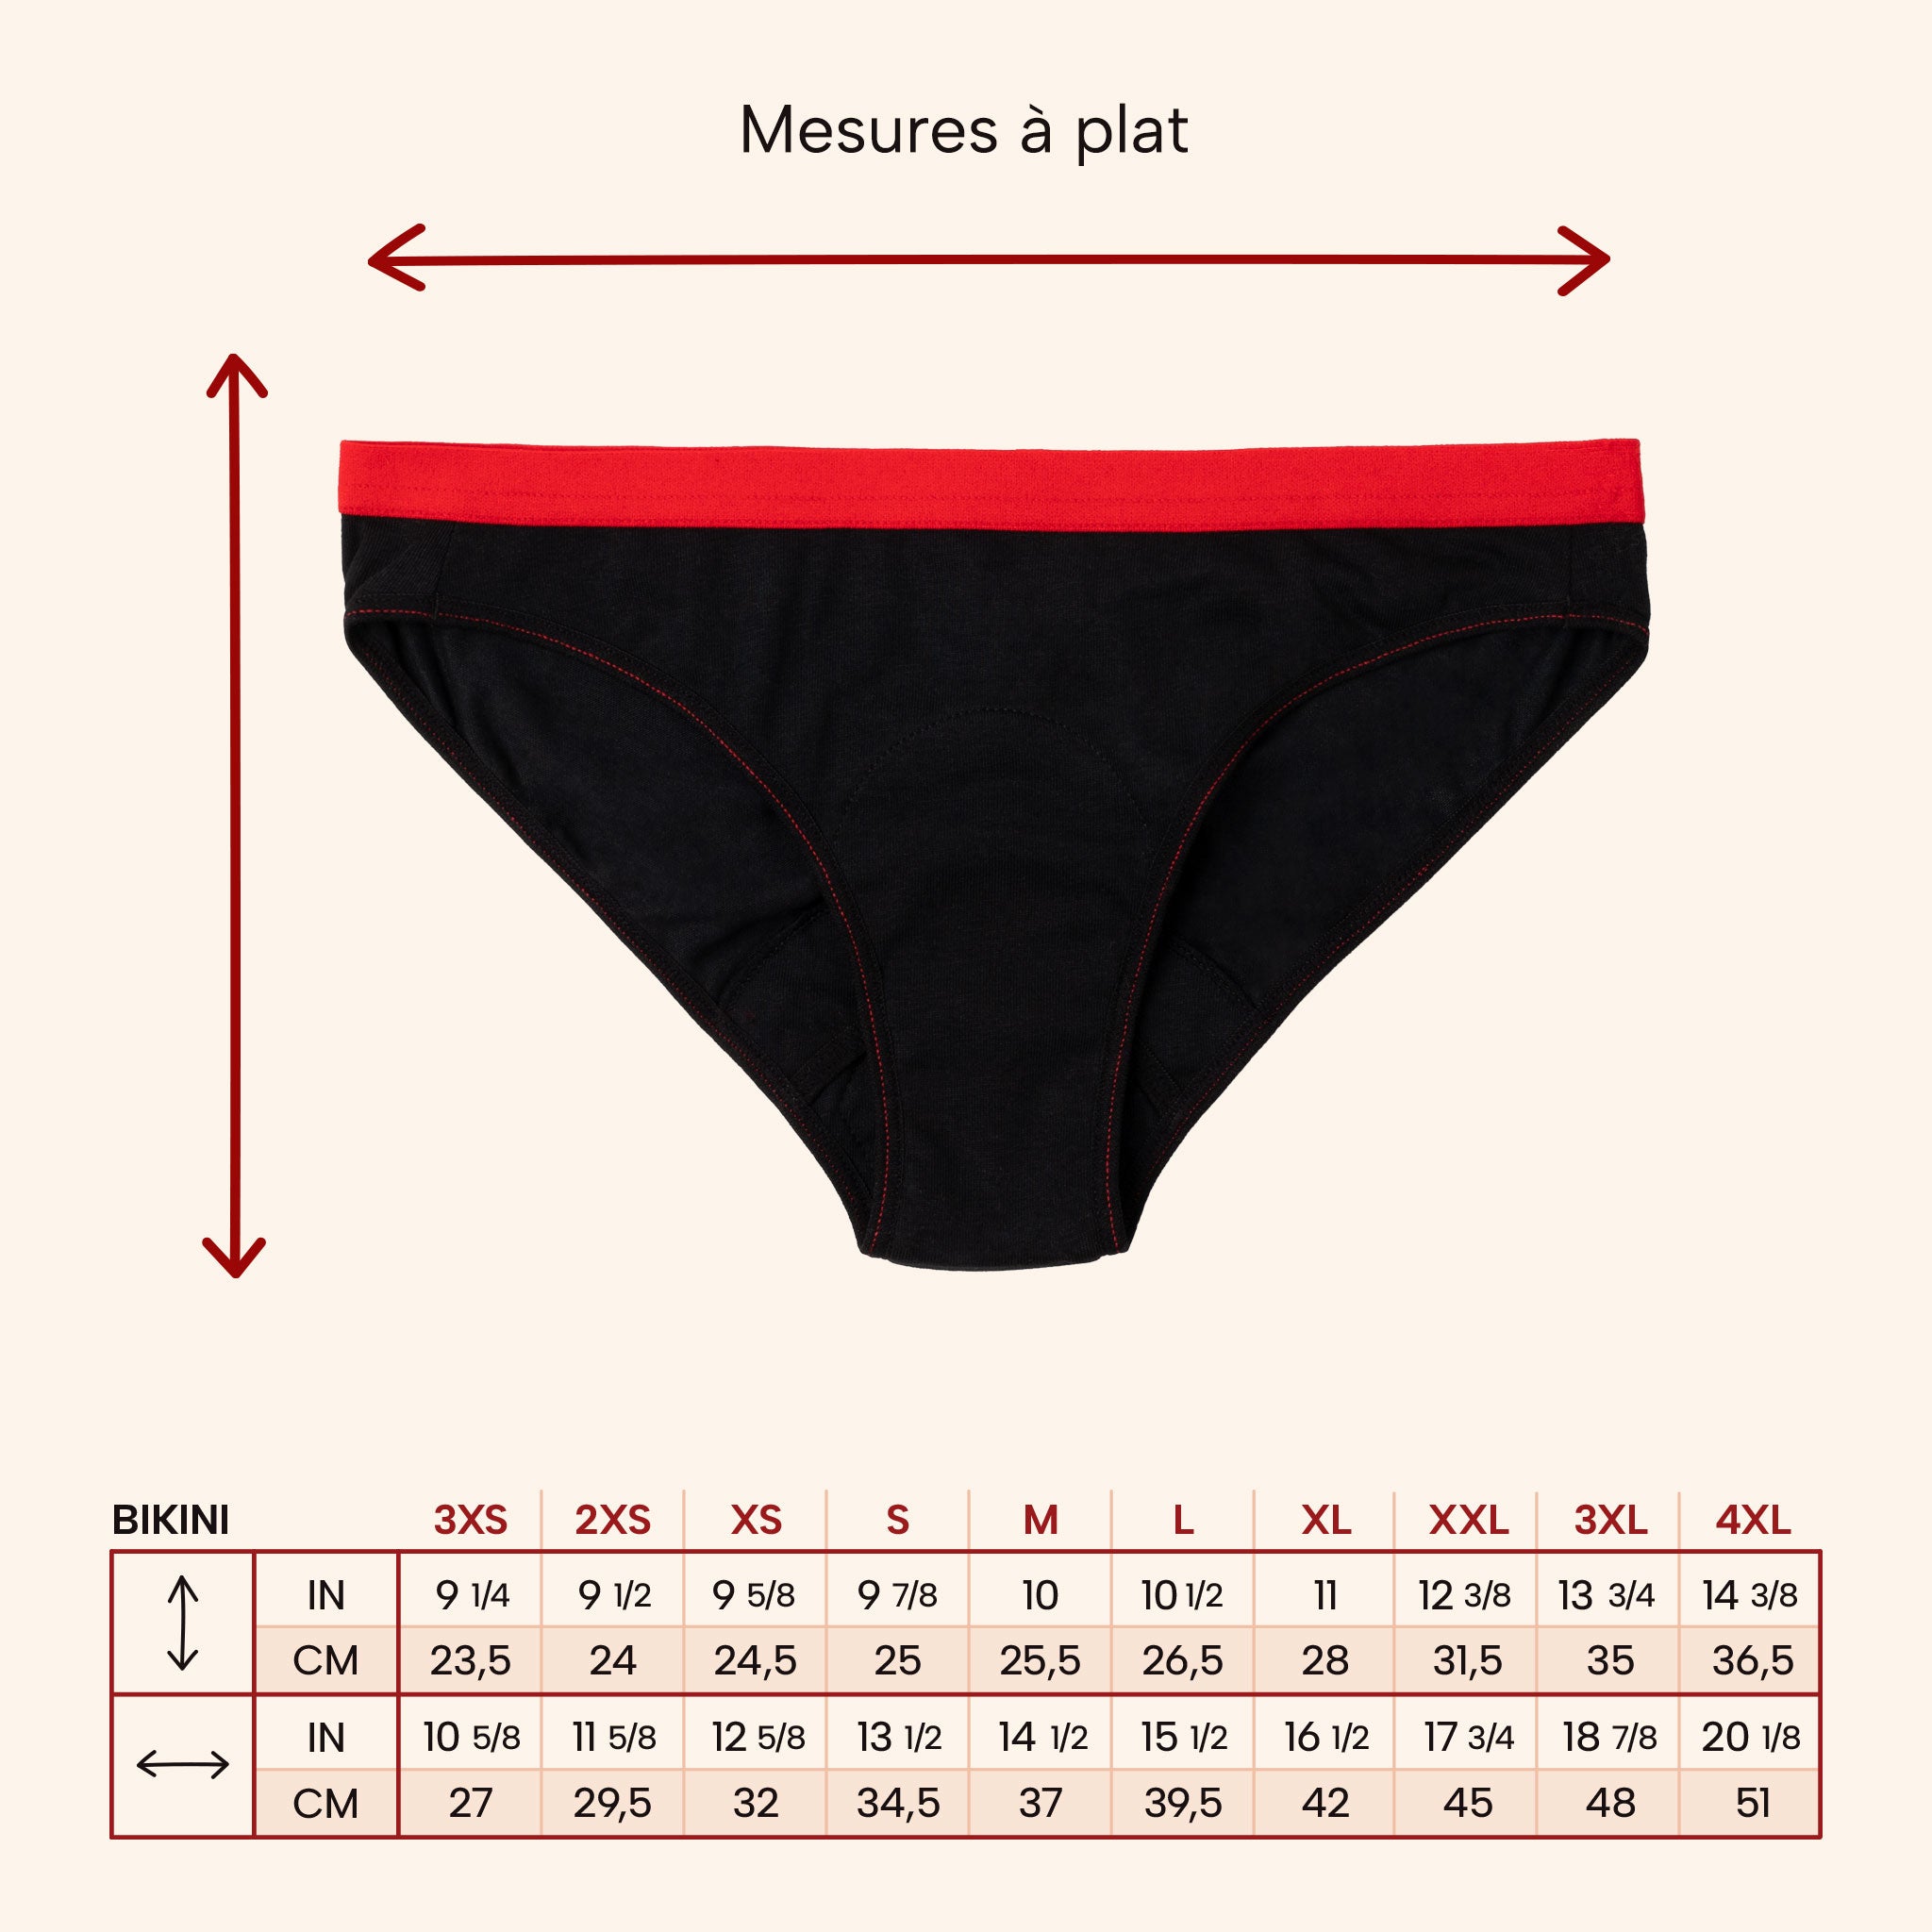 The Bikini: Period underwear